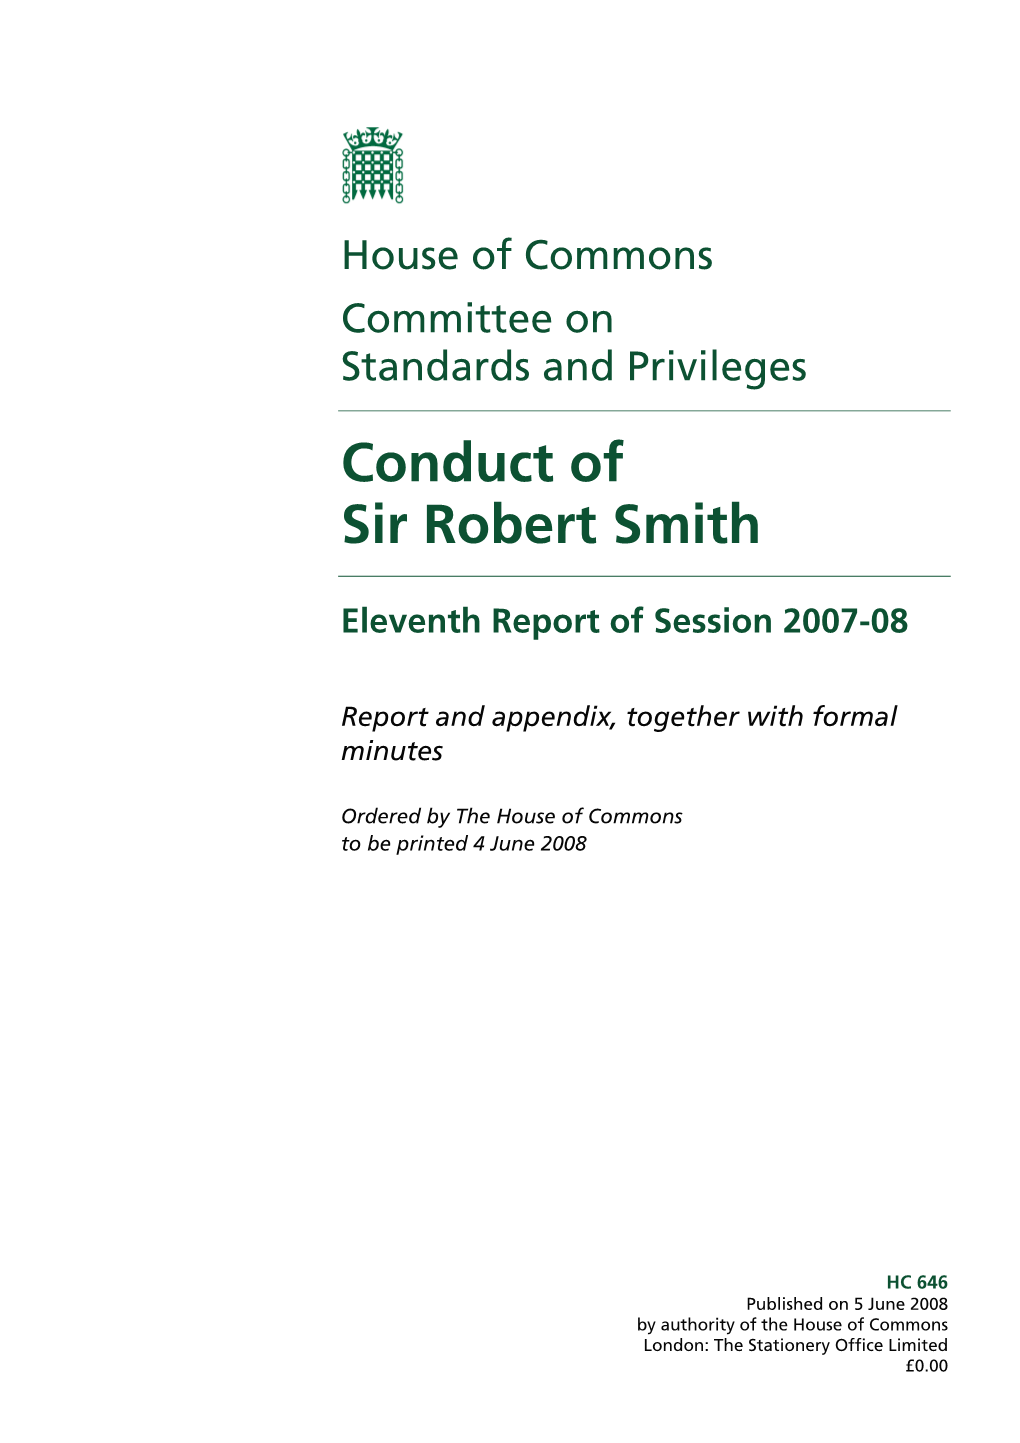 Conduct of Sir Robert Smith